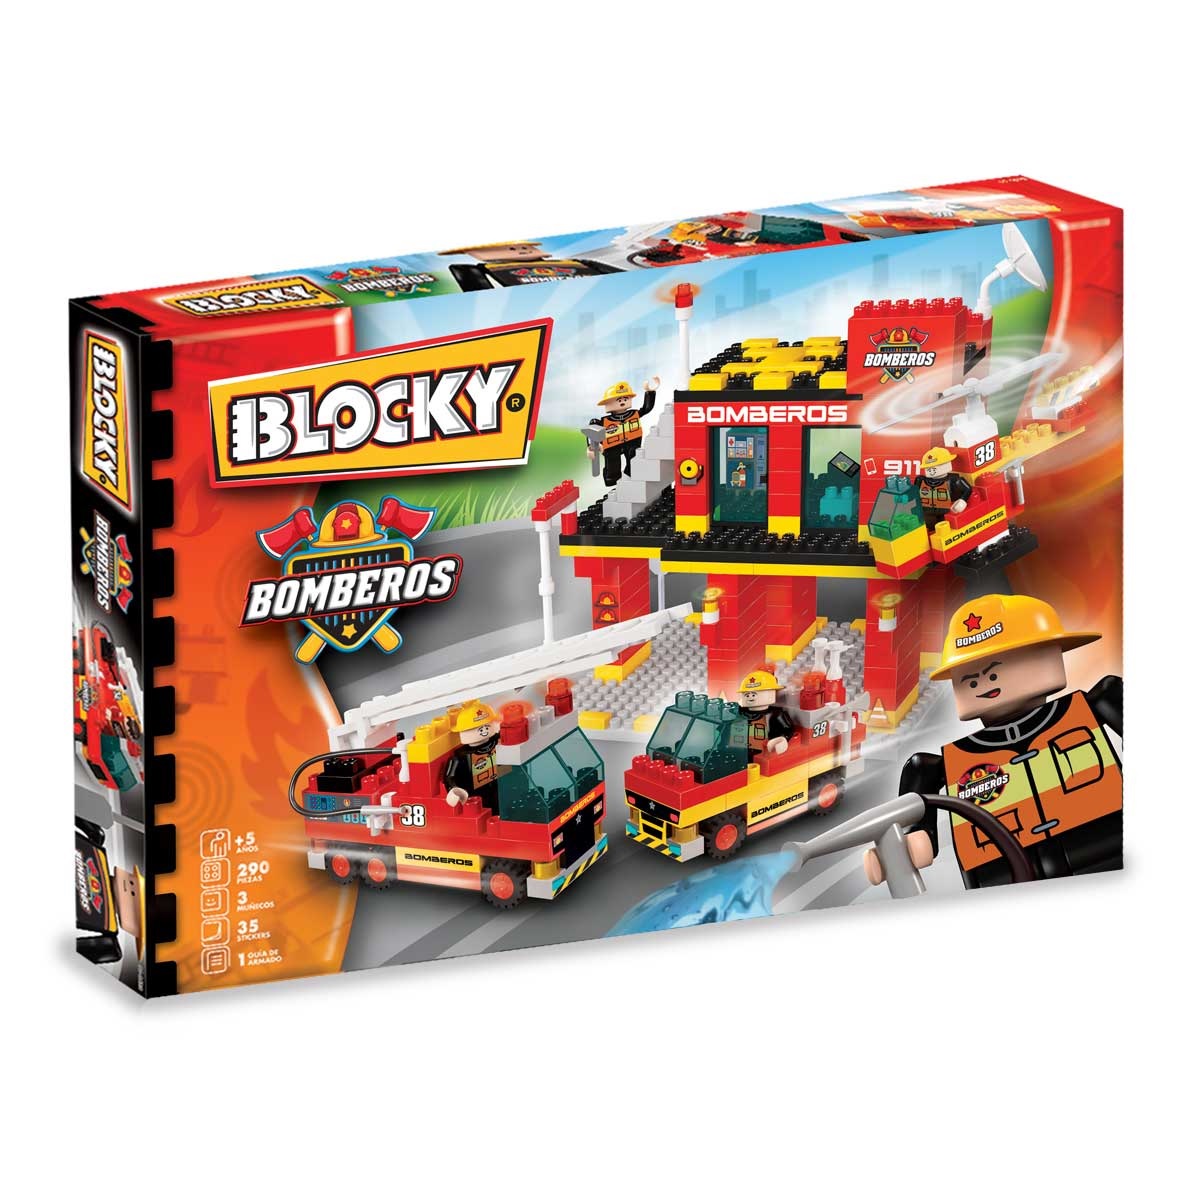 Blocky Bomberos 3 - 290 pz.